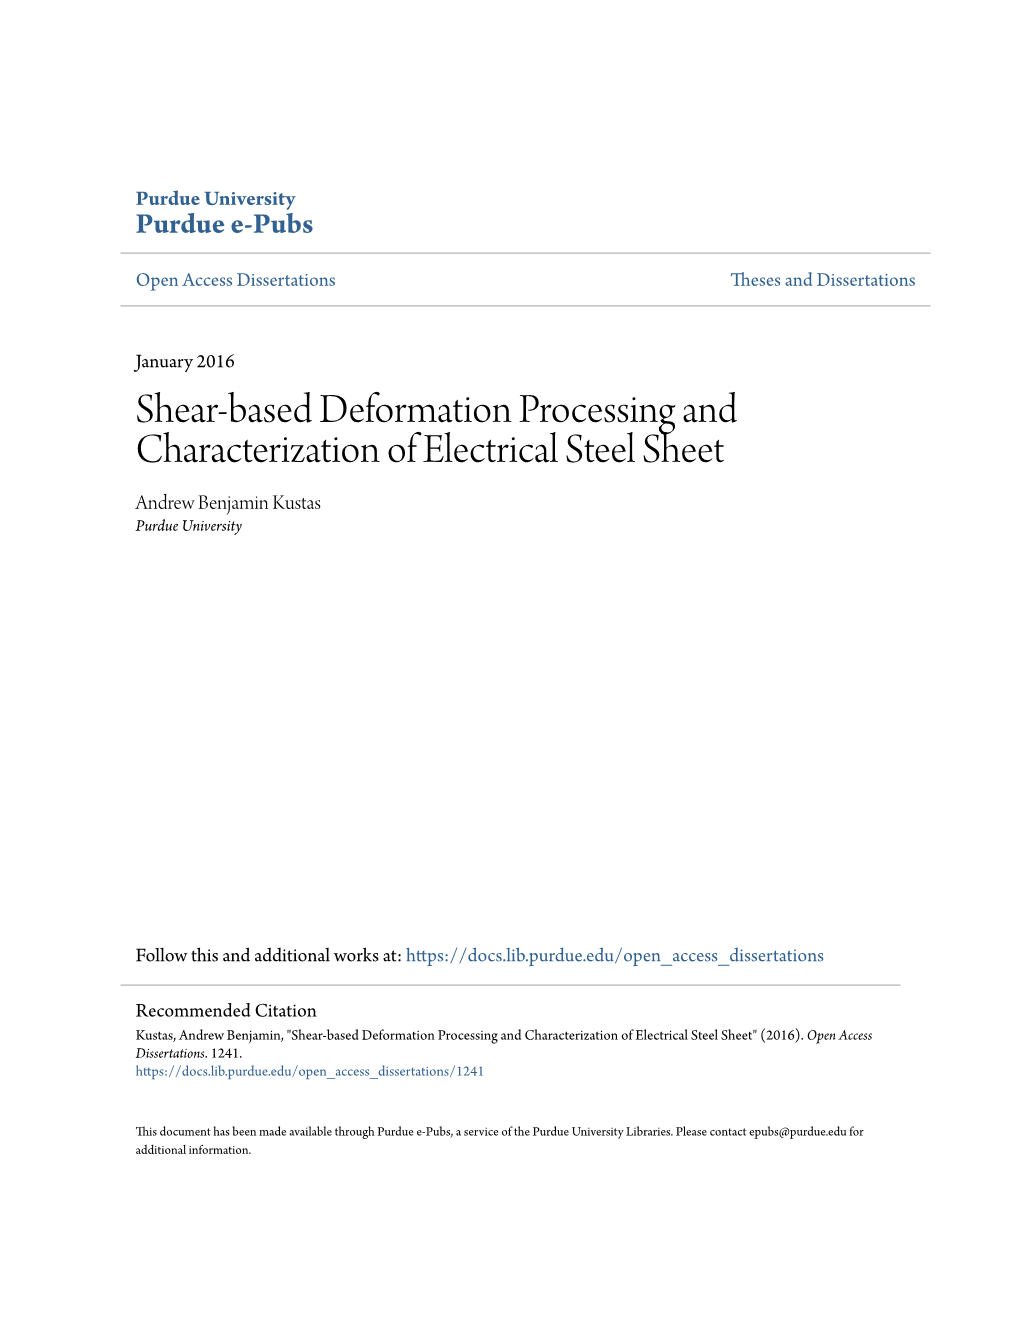 Shear-Based Deformation Processing and Characterization of Electrical Steel Sheet Andrew Benjamin Kustas Purdue University